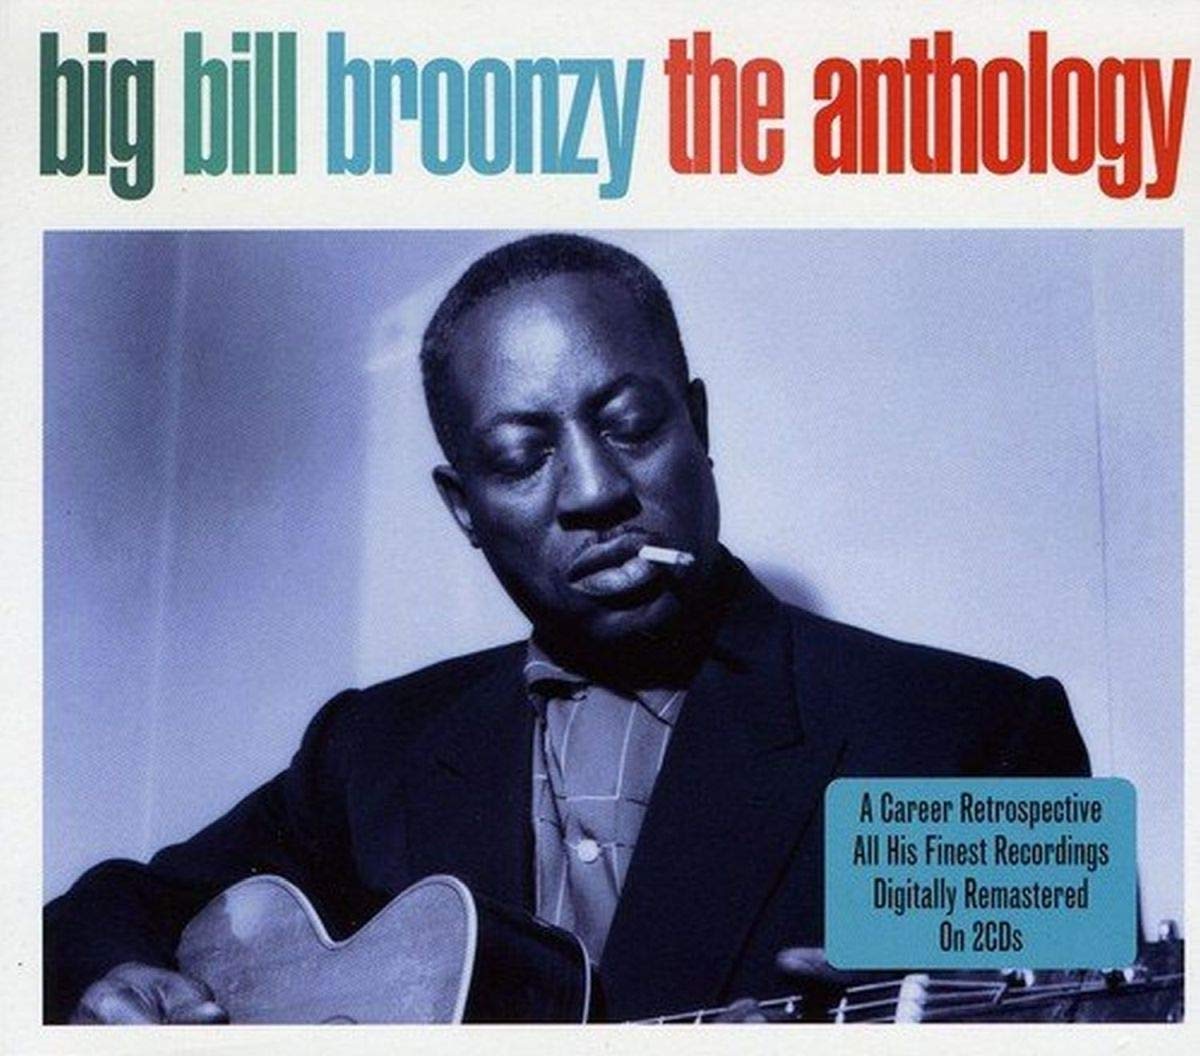 2CD Big Bill Broonzy - The anthology